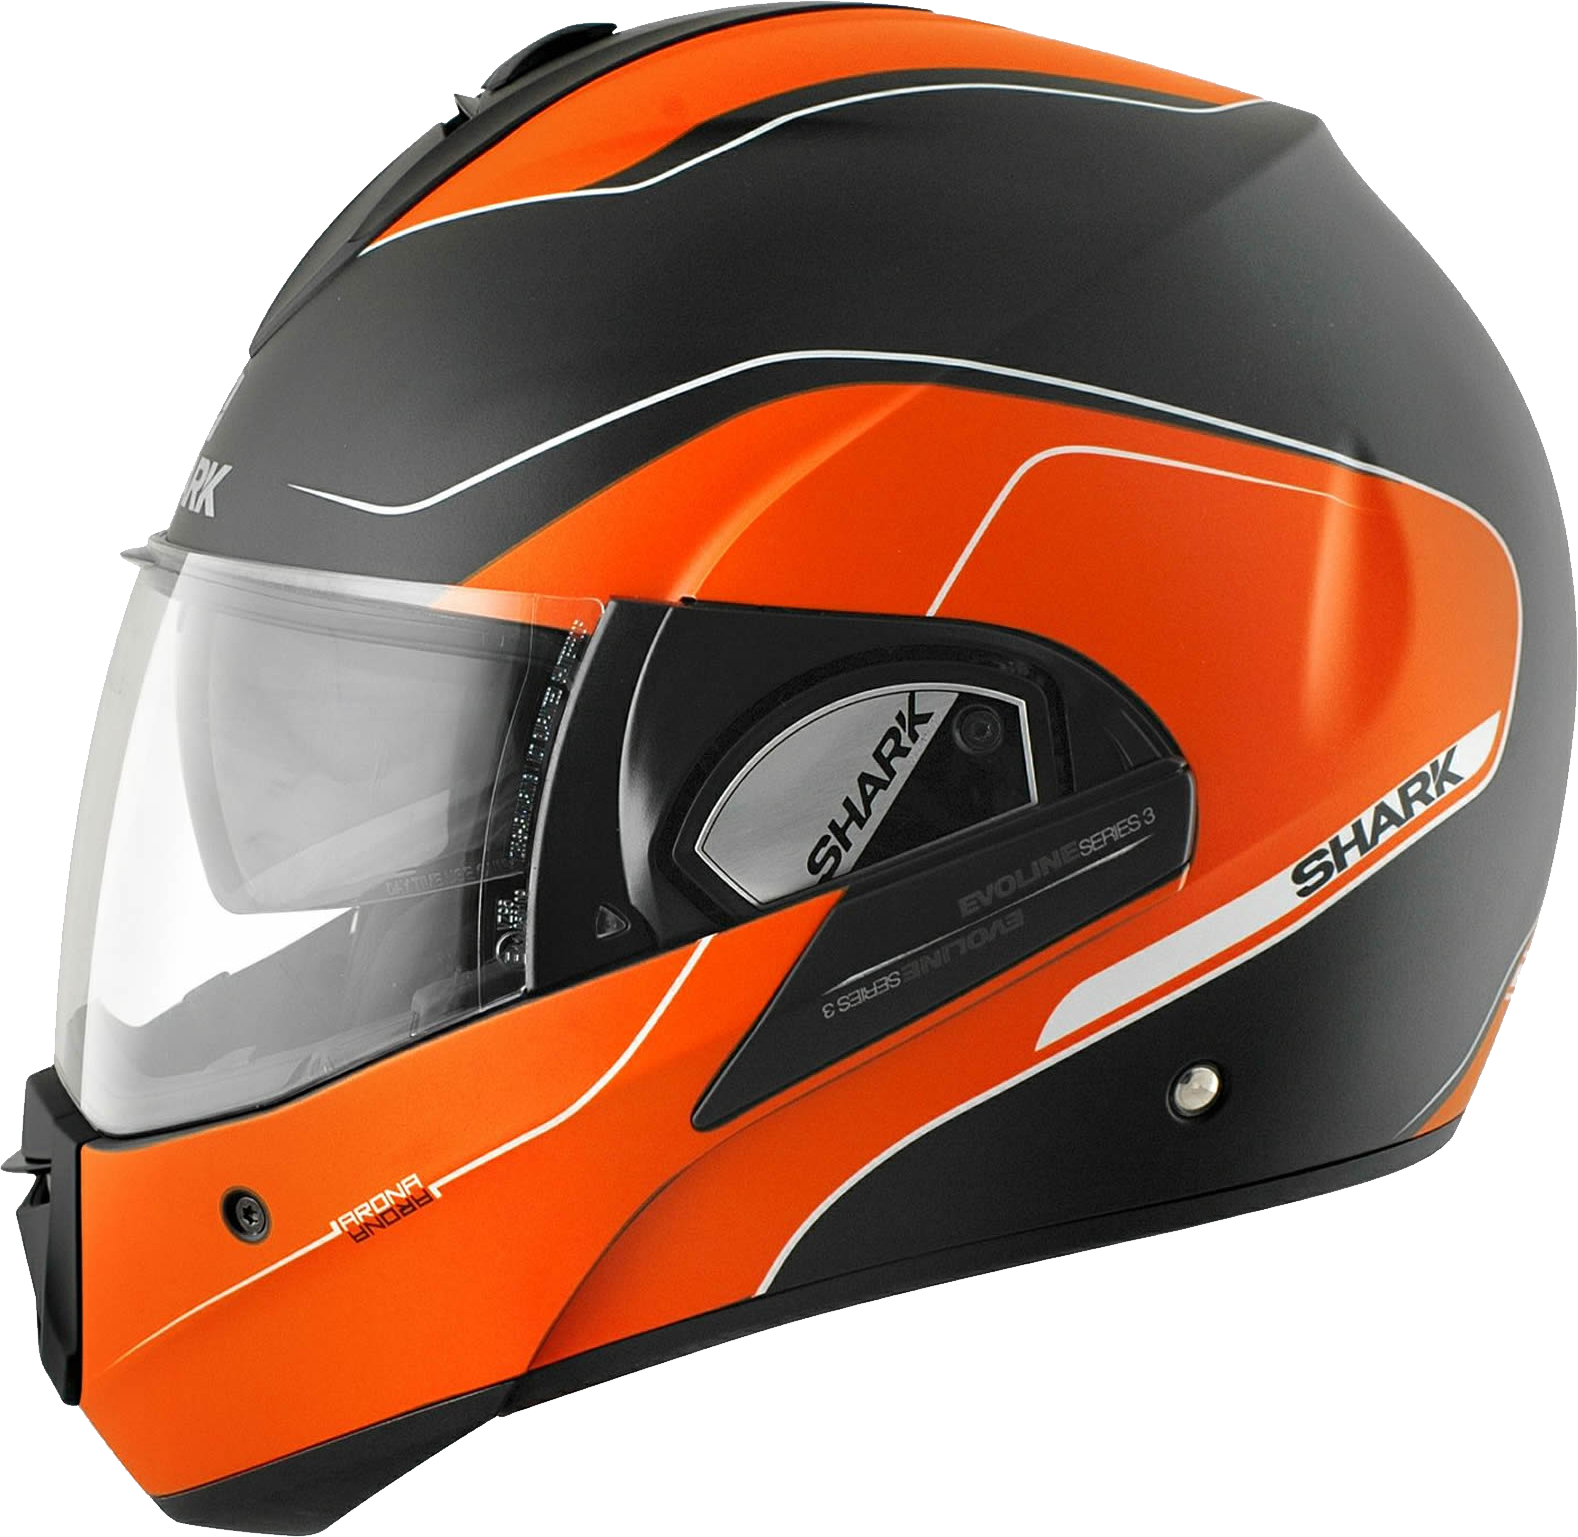 Motorcycle helmet PNG Imahe Libreng Download